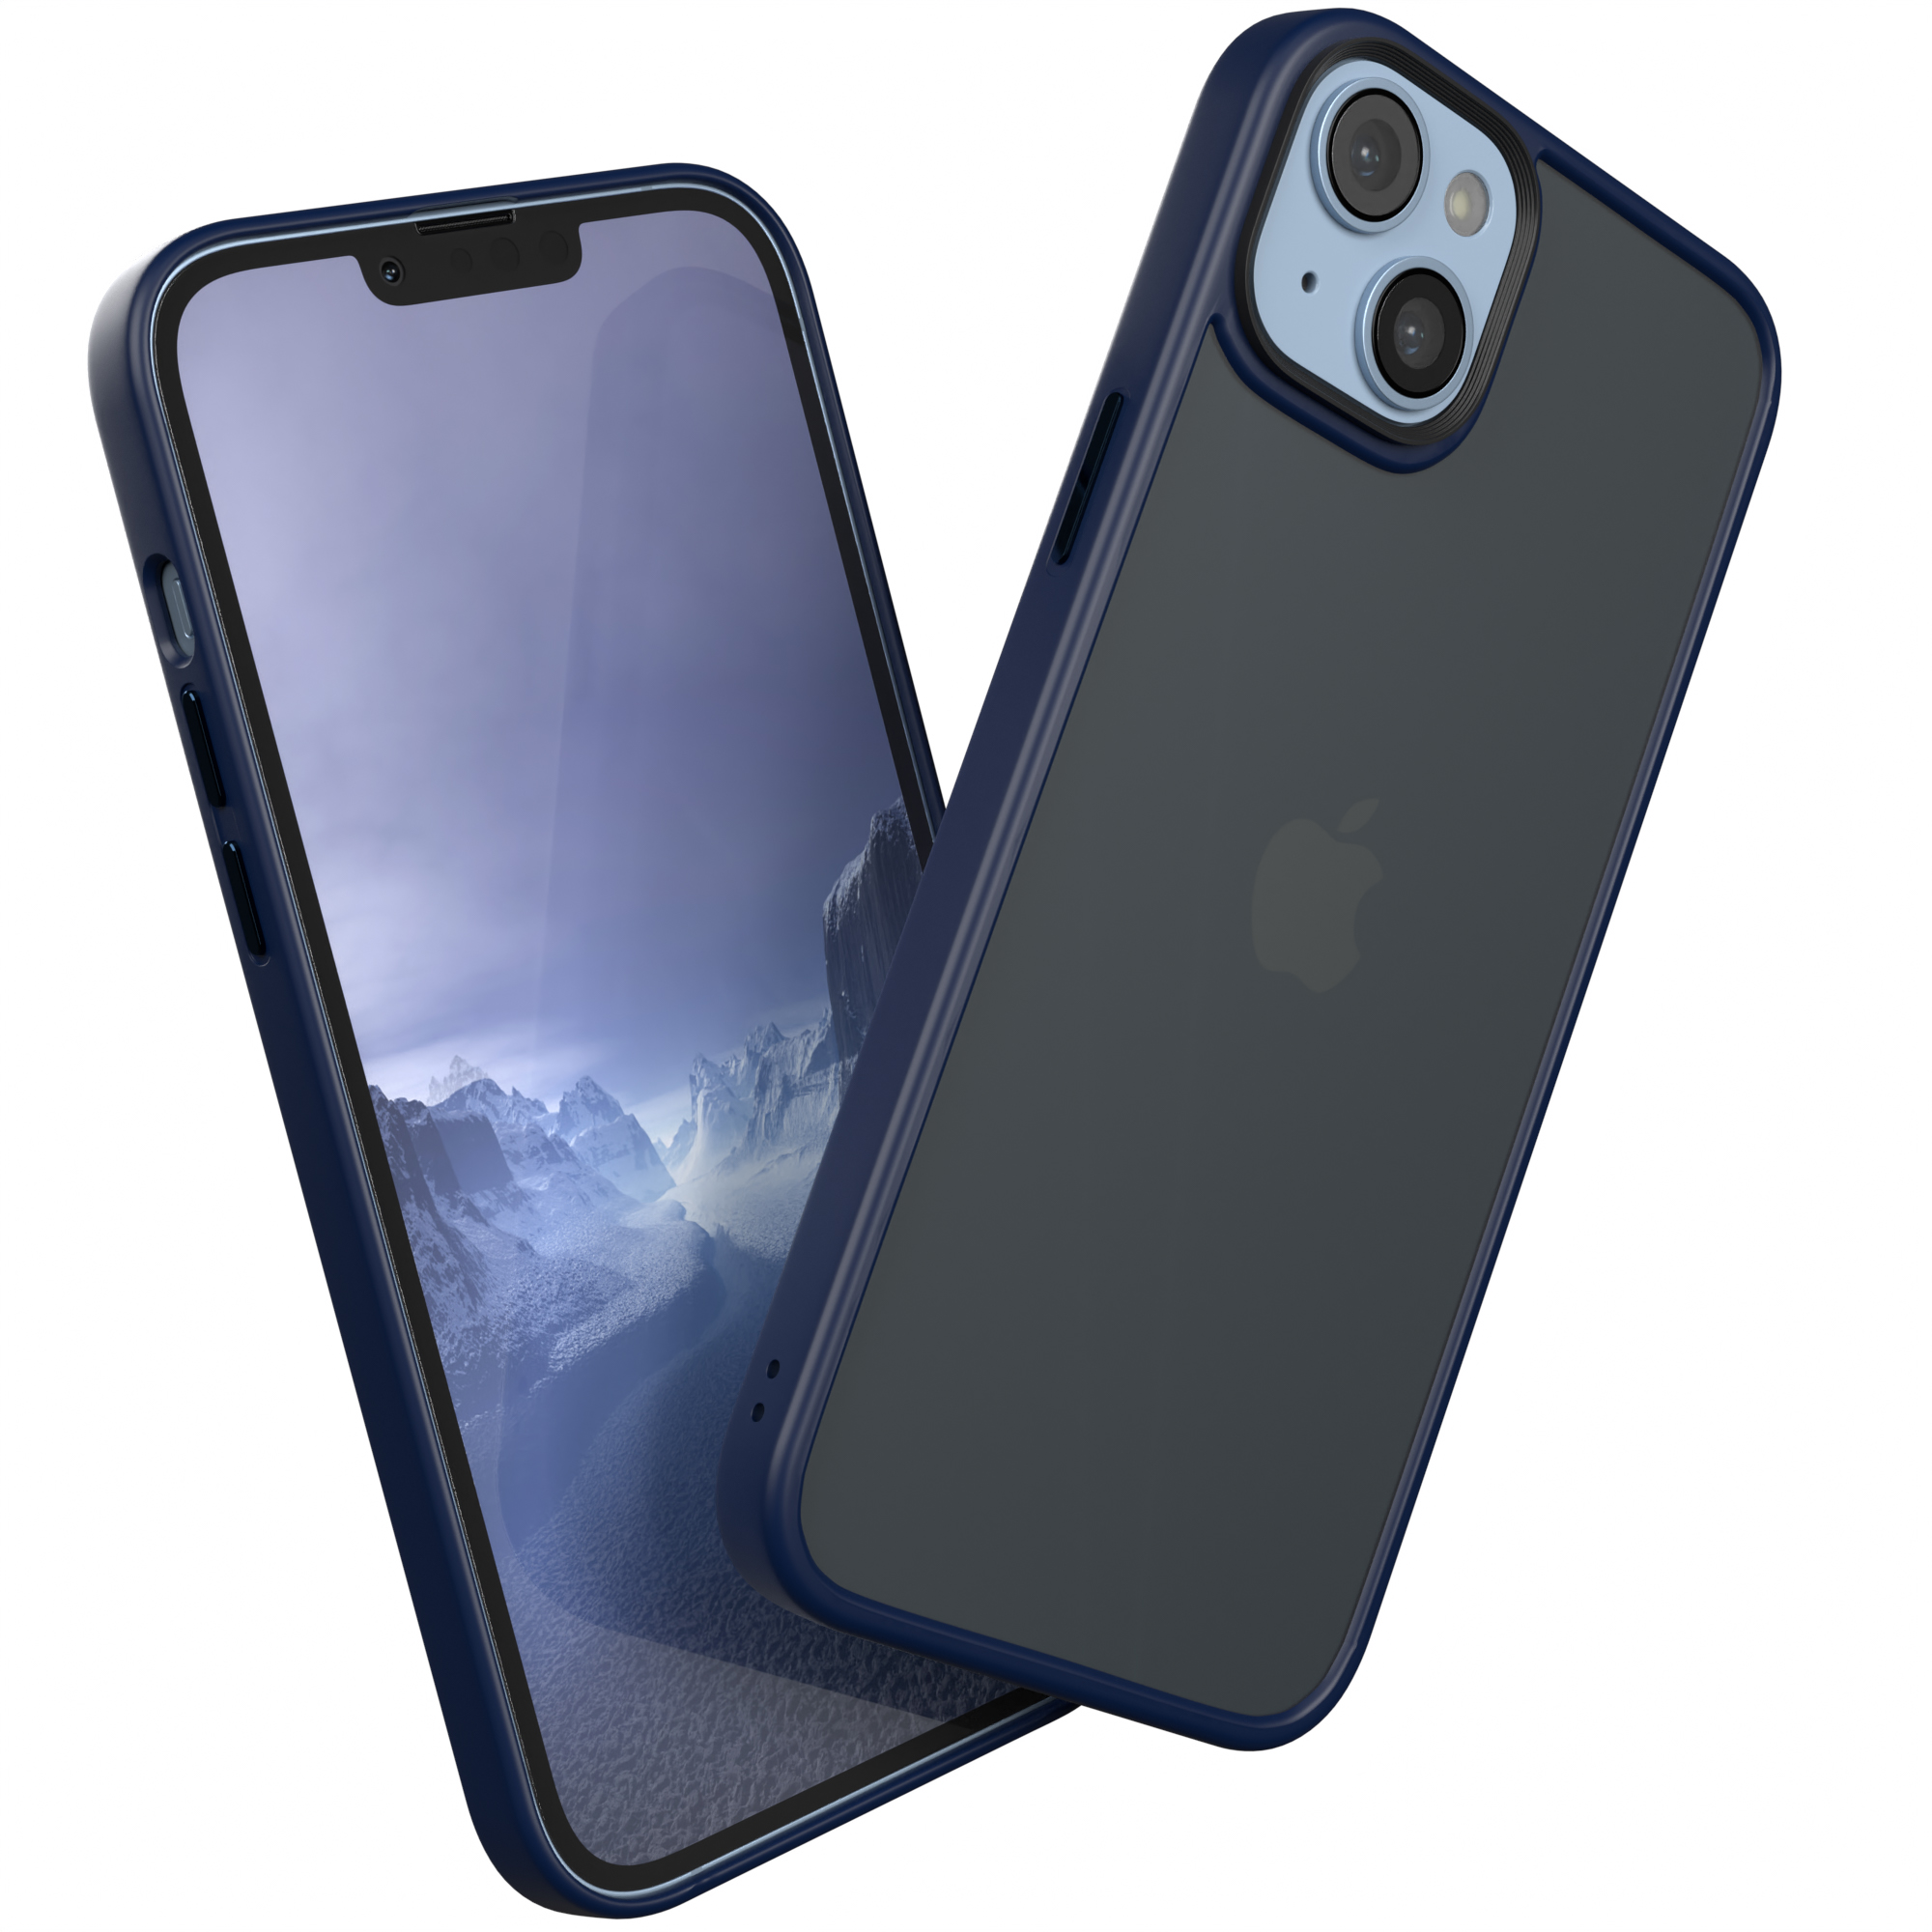 CASE Apple, iPhone Outdoor Matt, / Case 14 Plus, Backcover, EAZY Nachtblau Blau